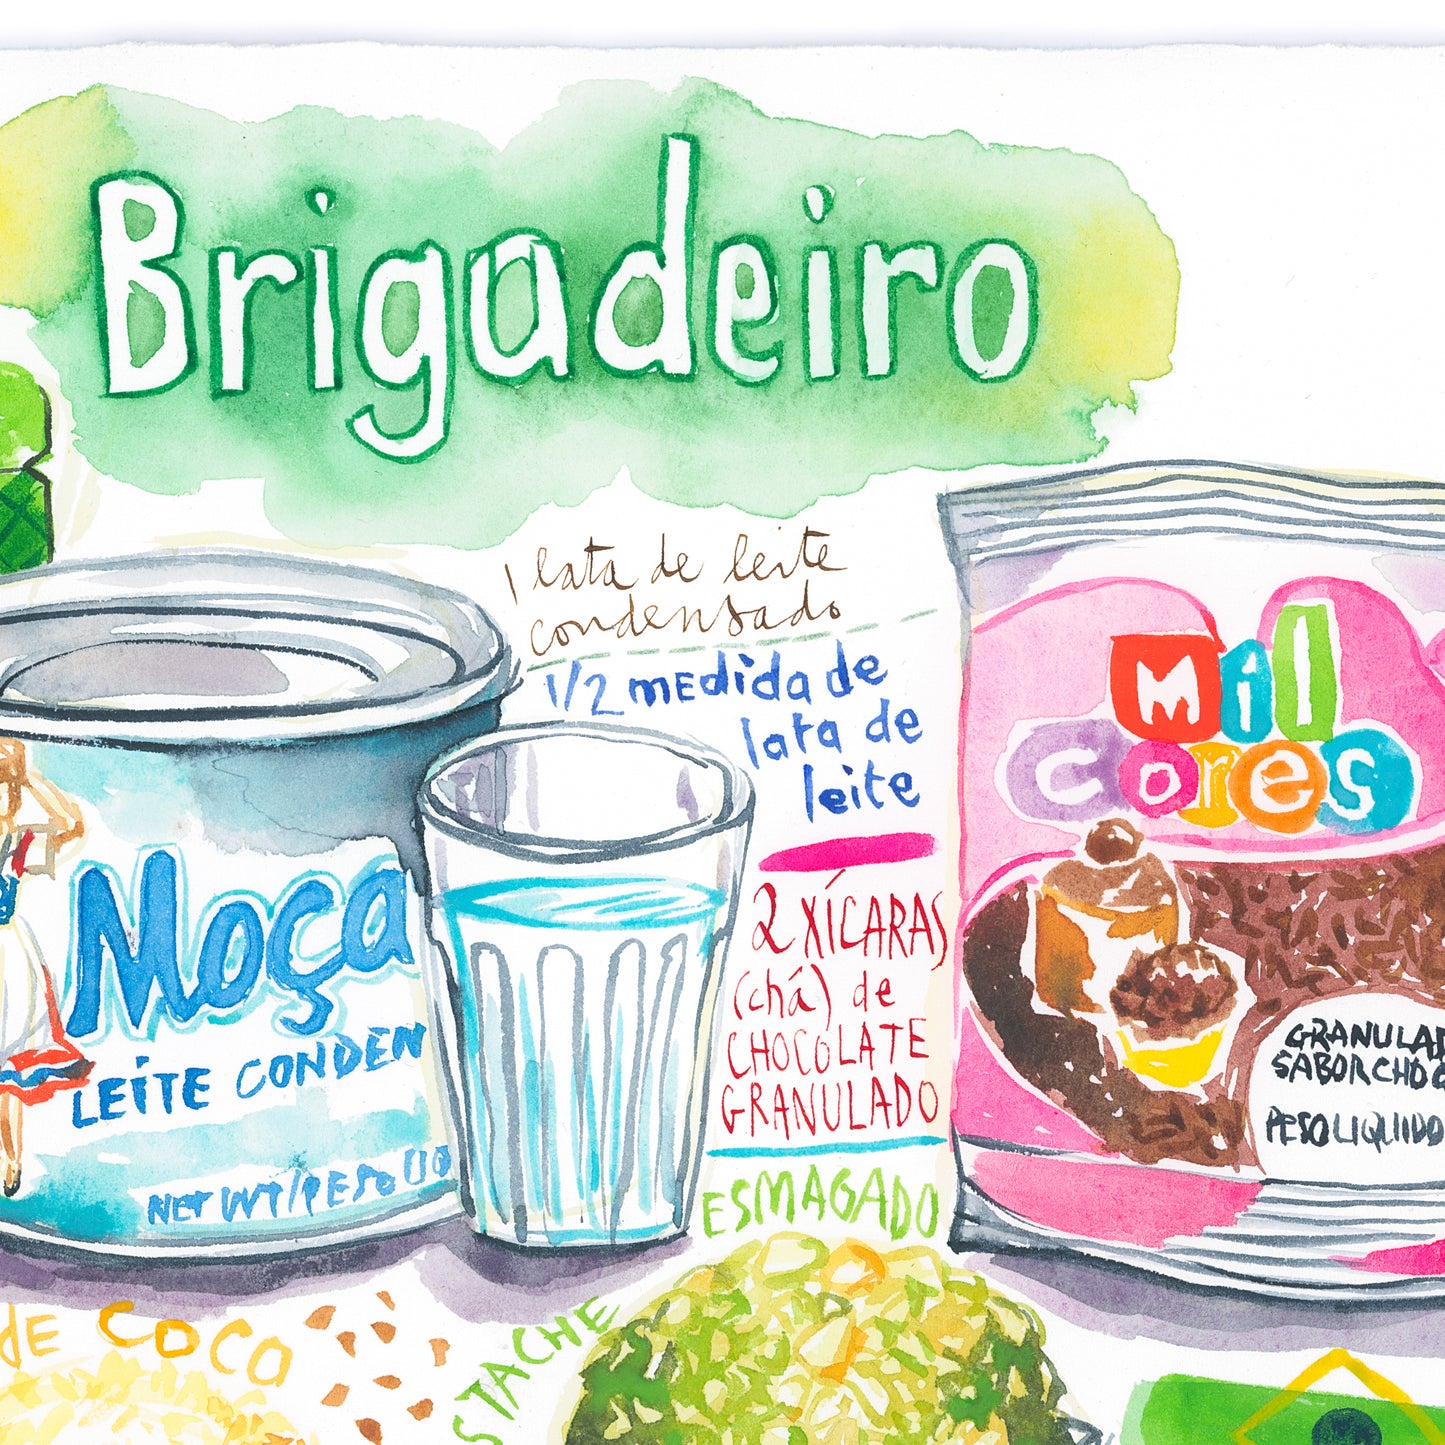 Brigadeiro recipe. Original watercolor painting